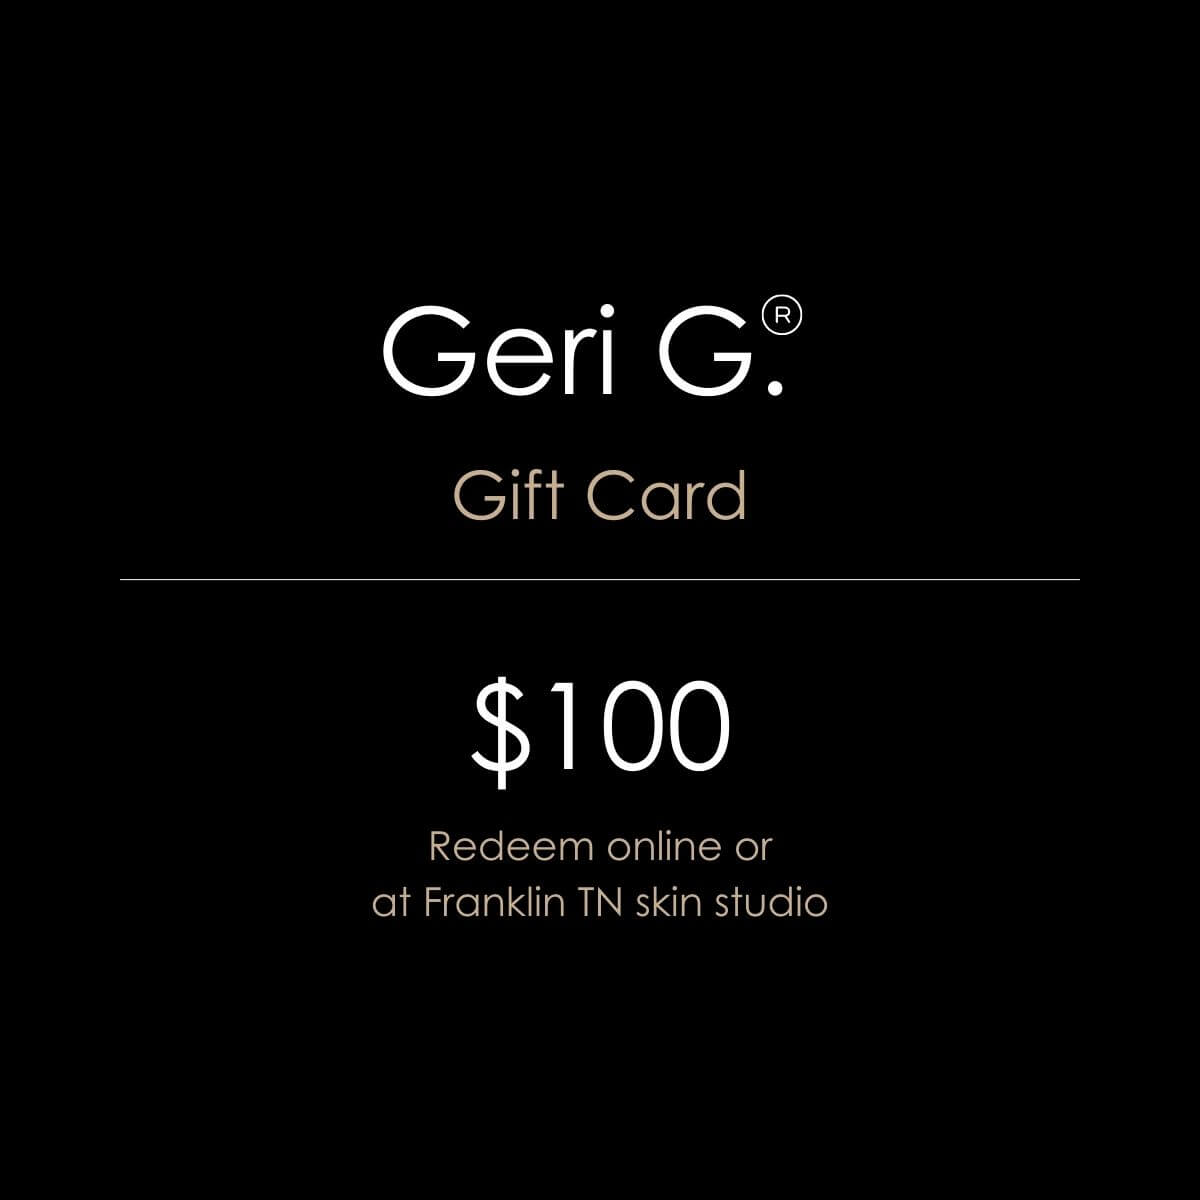 Geri G. Beauty $100 GERI G®. Online Gift Card